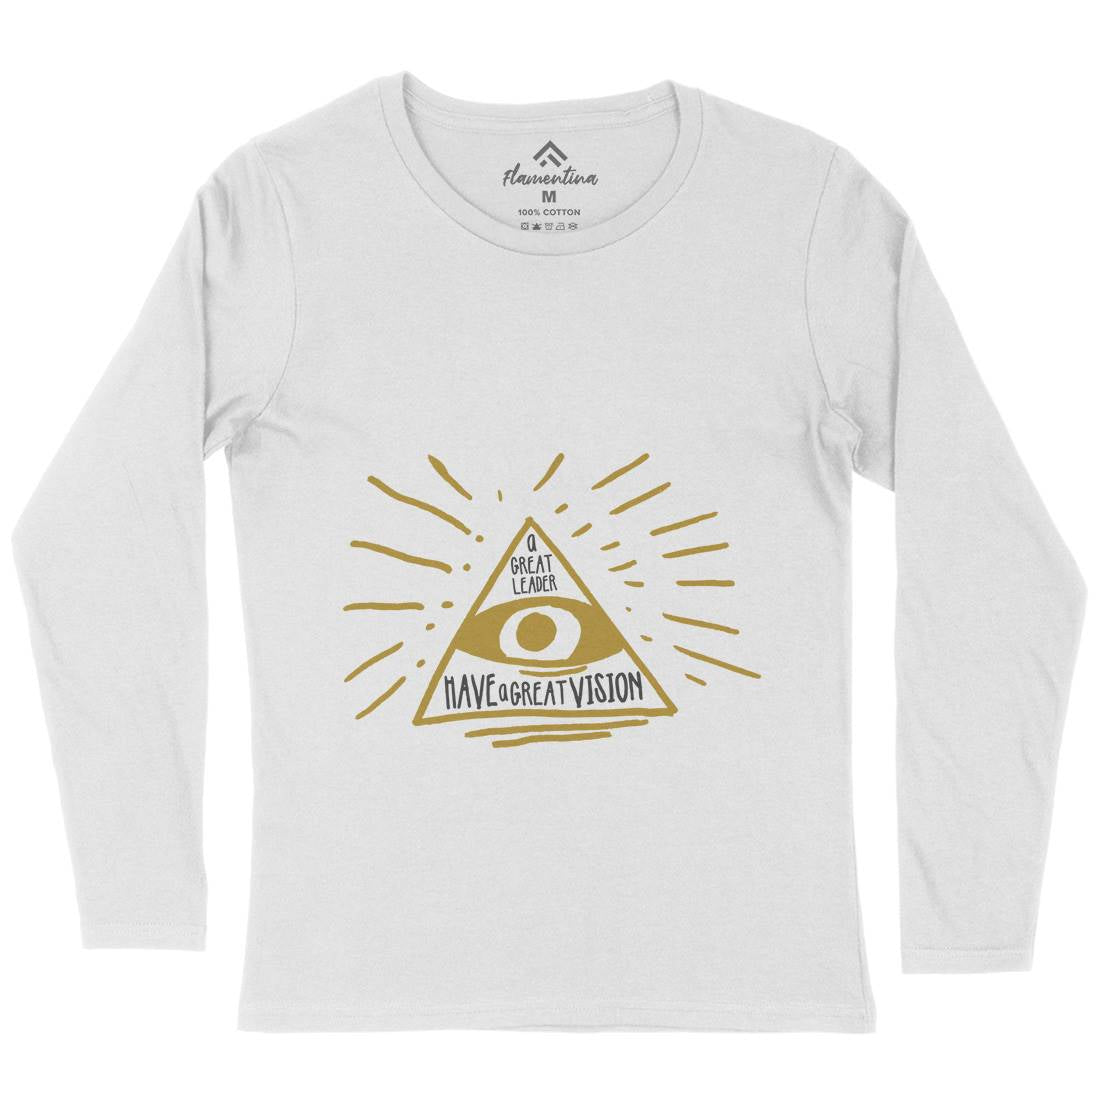 Great Leader Womens Long Sleeve T-Shirt Illuminati A322